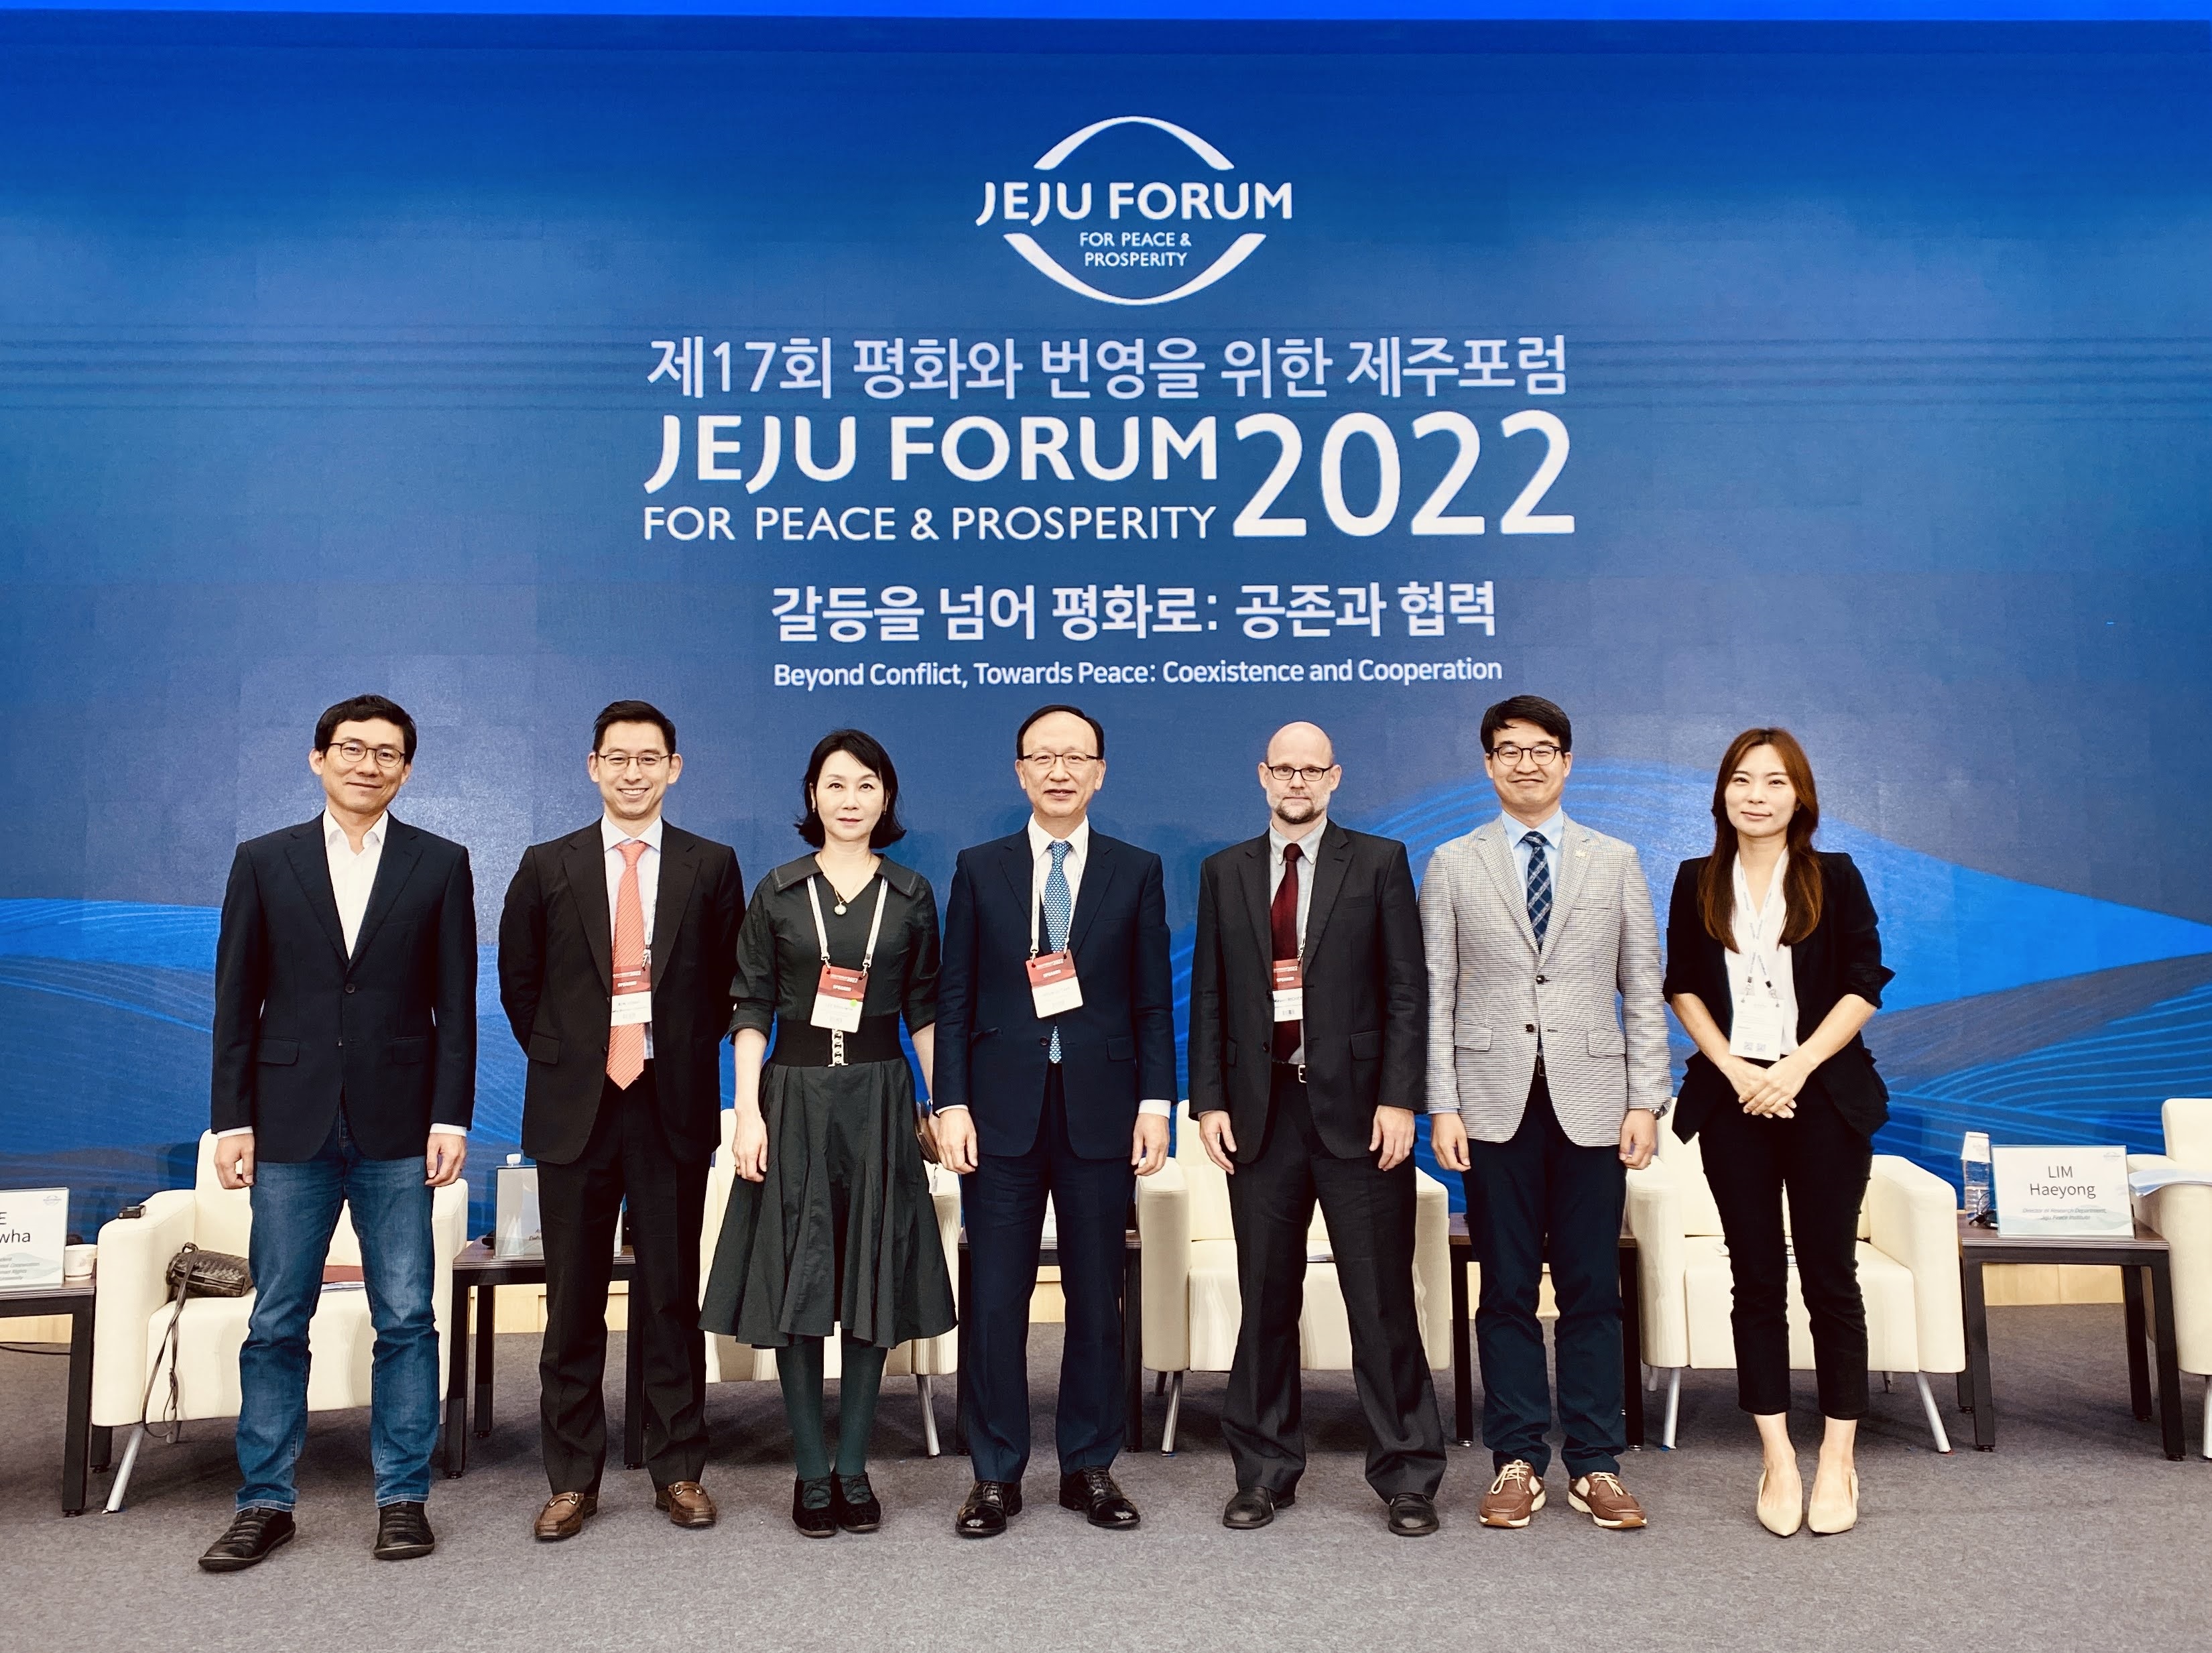 [Jeju Forum 2022] Plenary Session 3. Ukraine Crisis and Politics of the Great Powers